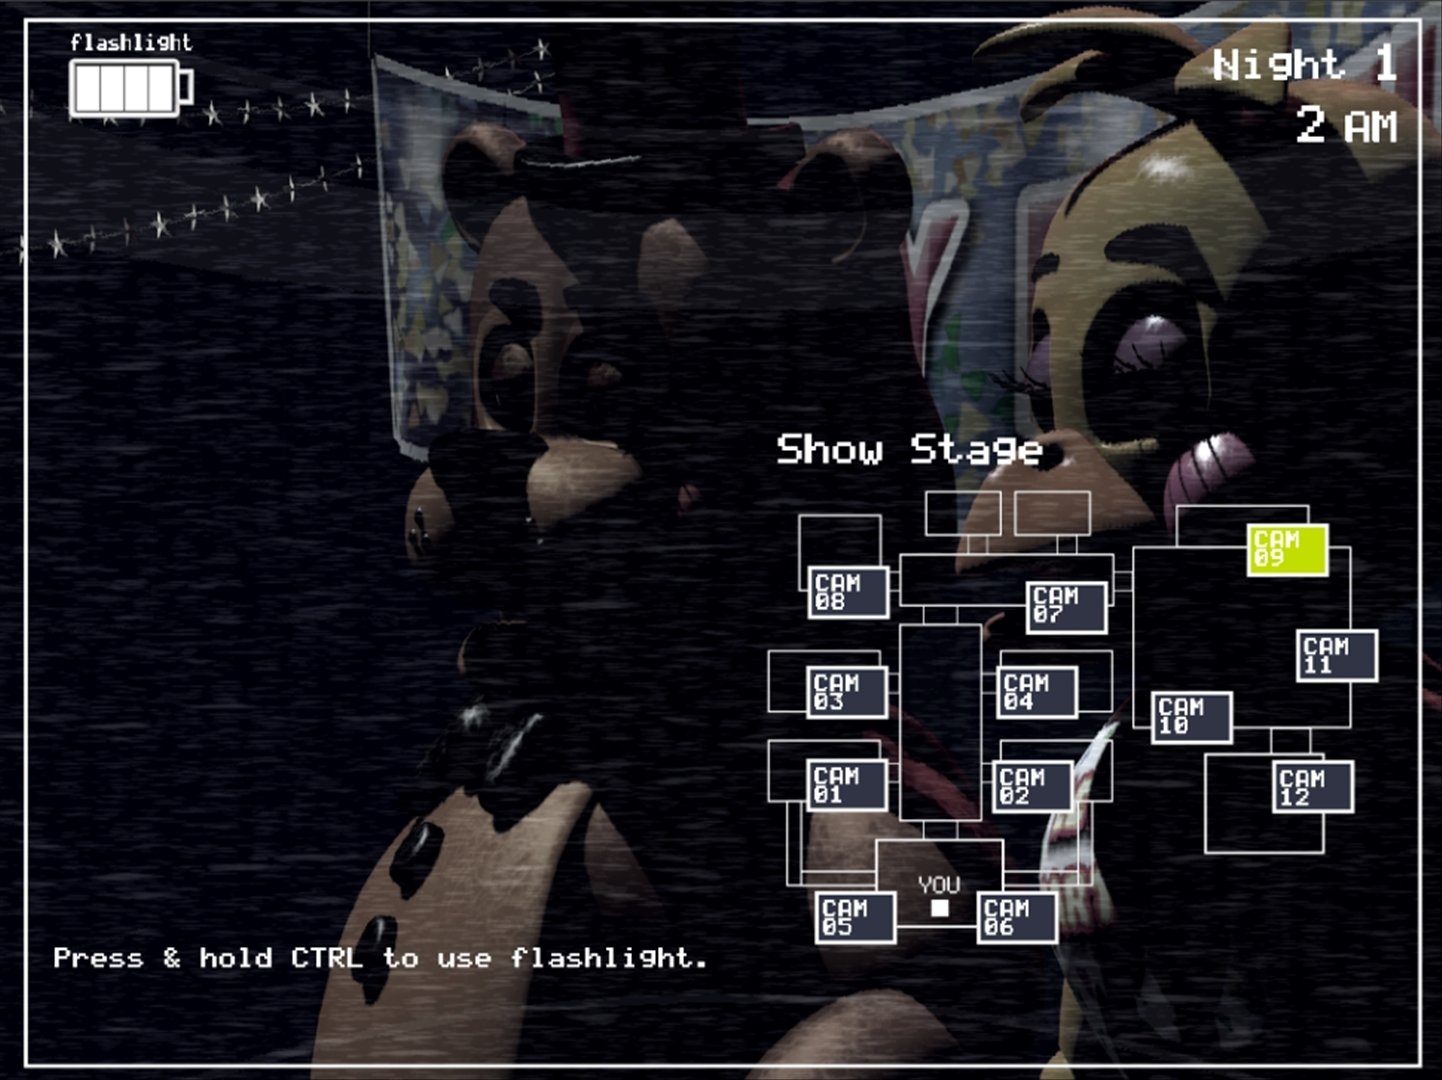 Download Five Nights at Freddy's 2 - Baixar para PC Grátis